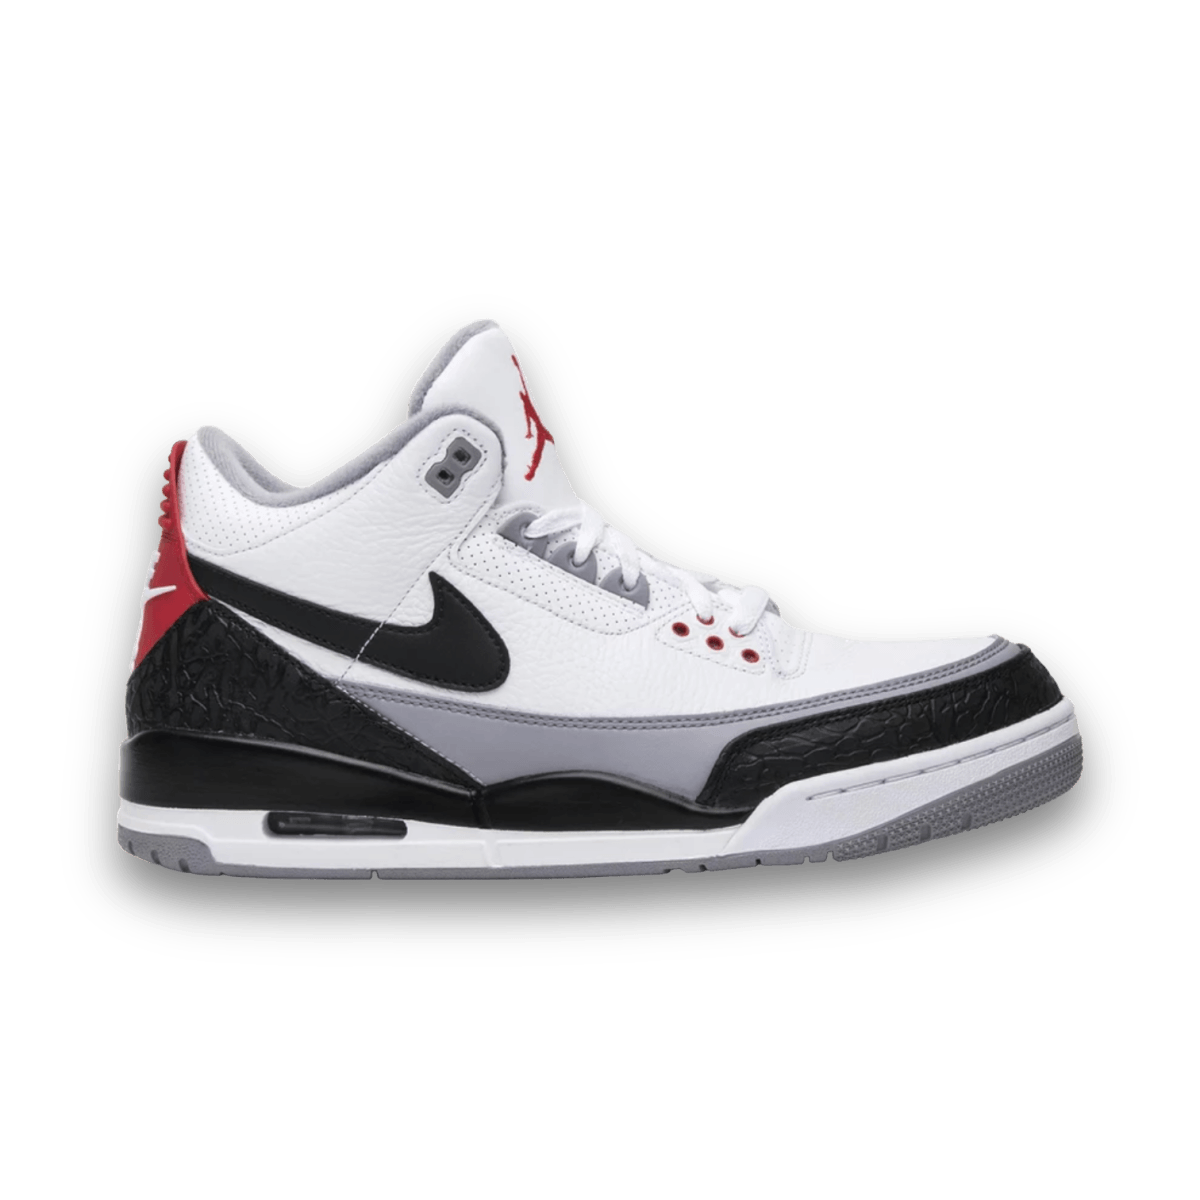 Air Jordan 3 Retro NRG 'Tinker' - Mid Sneaker - Jawns on Fire Sneakers & Streetwear